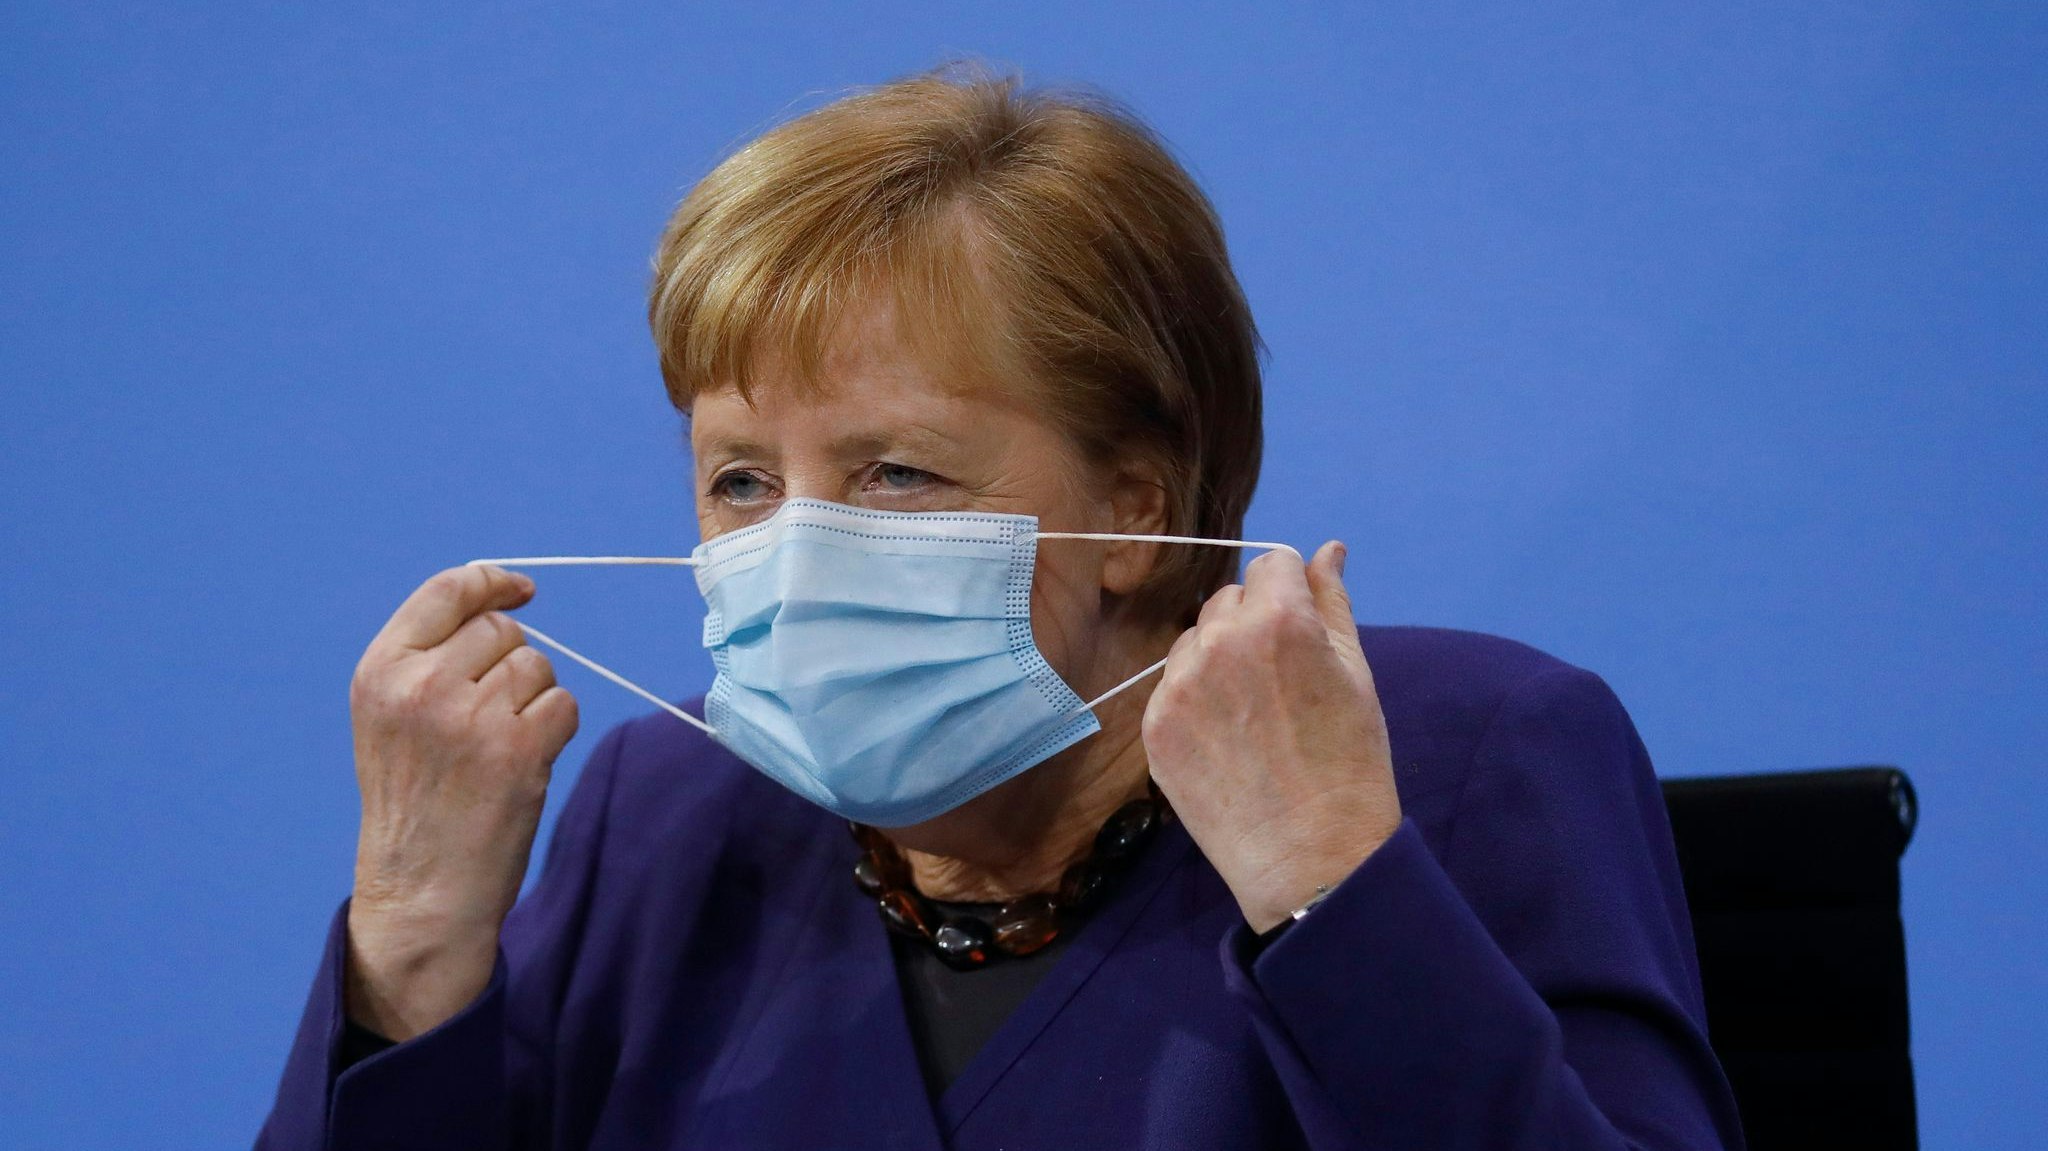 Bundeskanzlerin Angela Merkel. Archivfoto: dpa